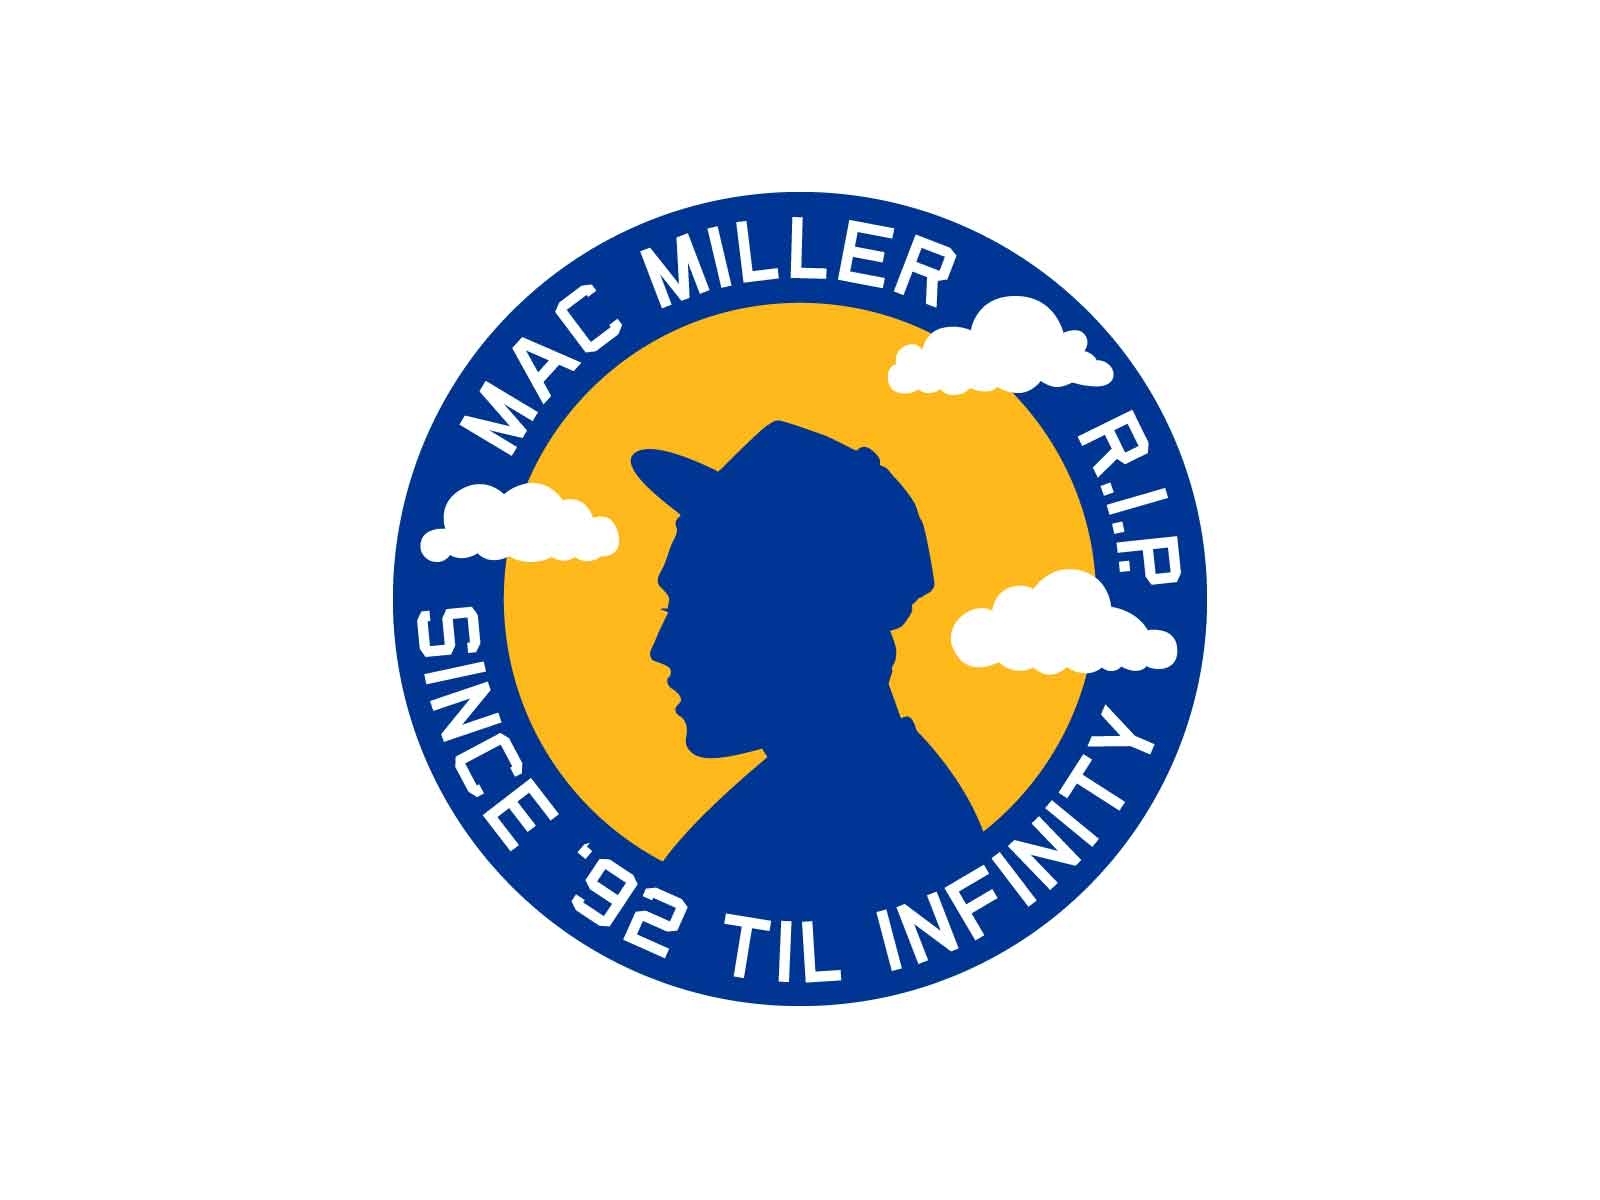 Mac Miller Tribute - Pitt Basketball by Dylan Winters on Dribbble